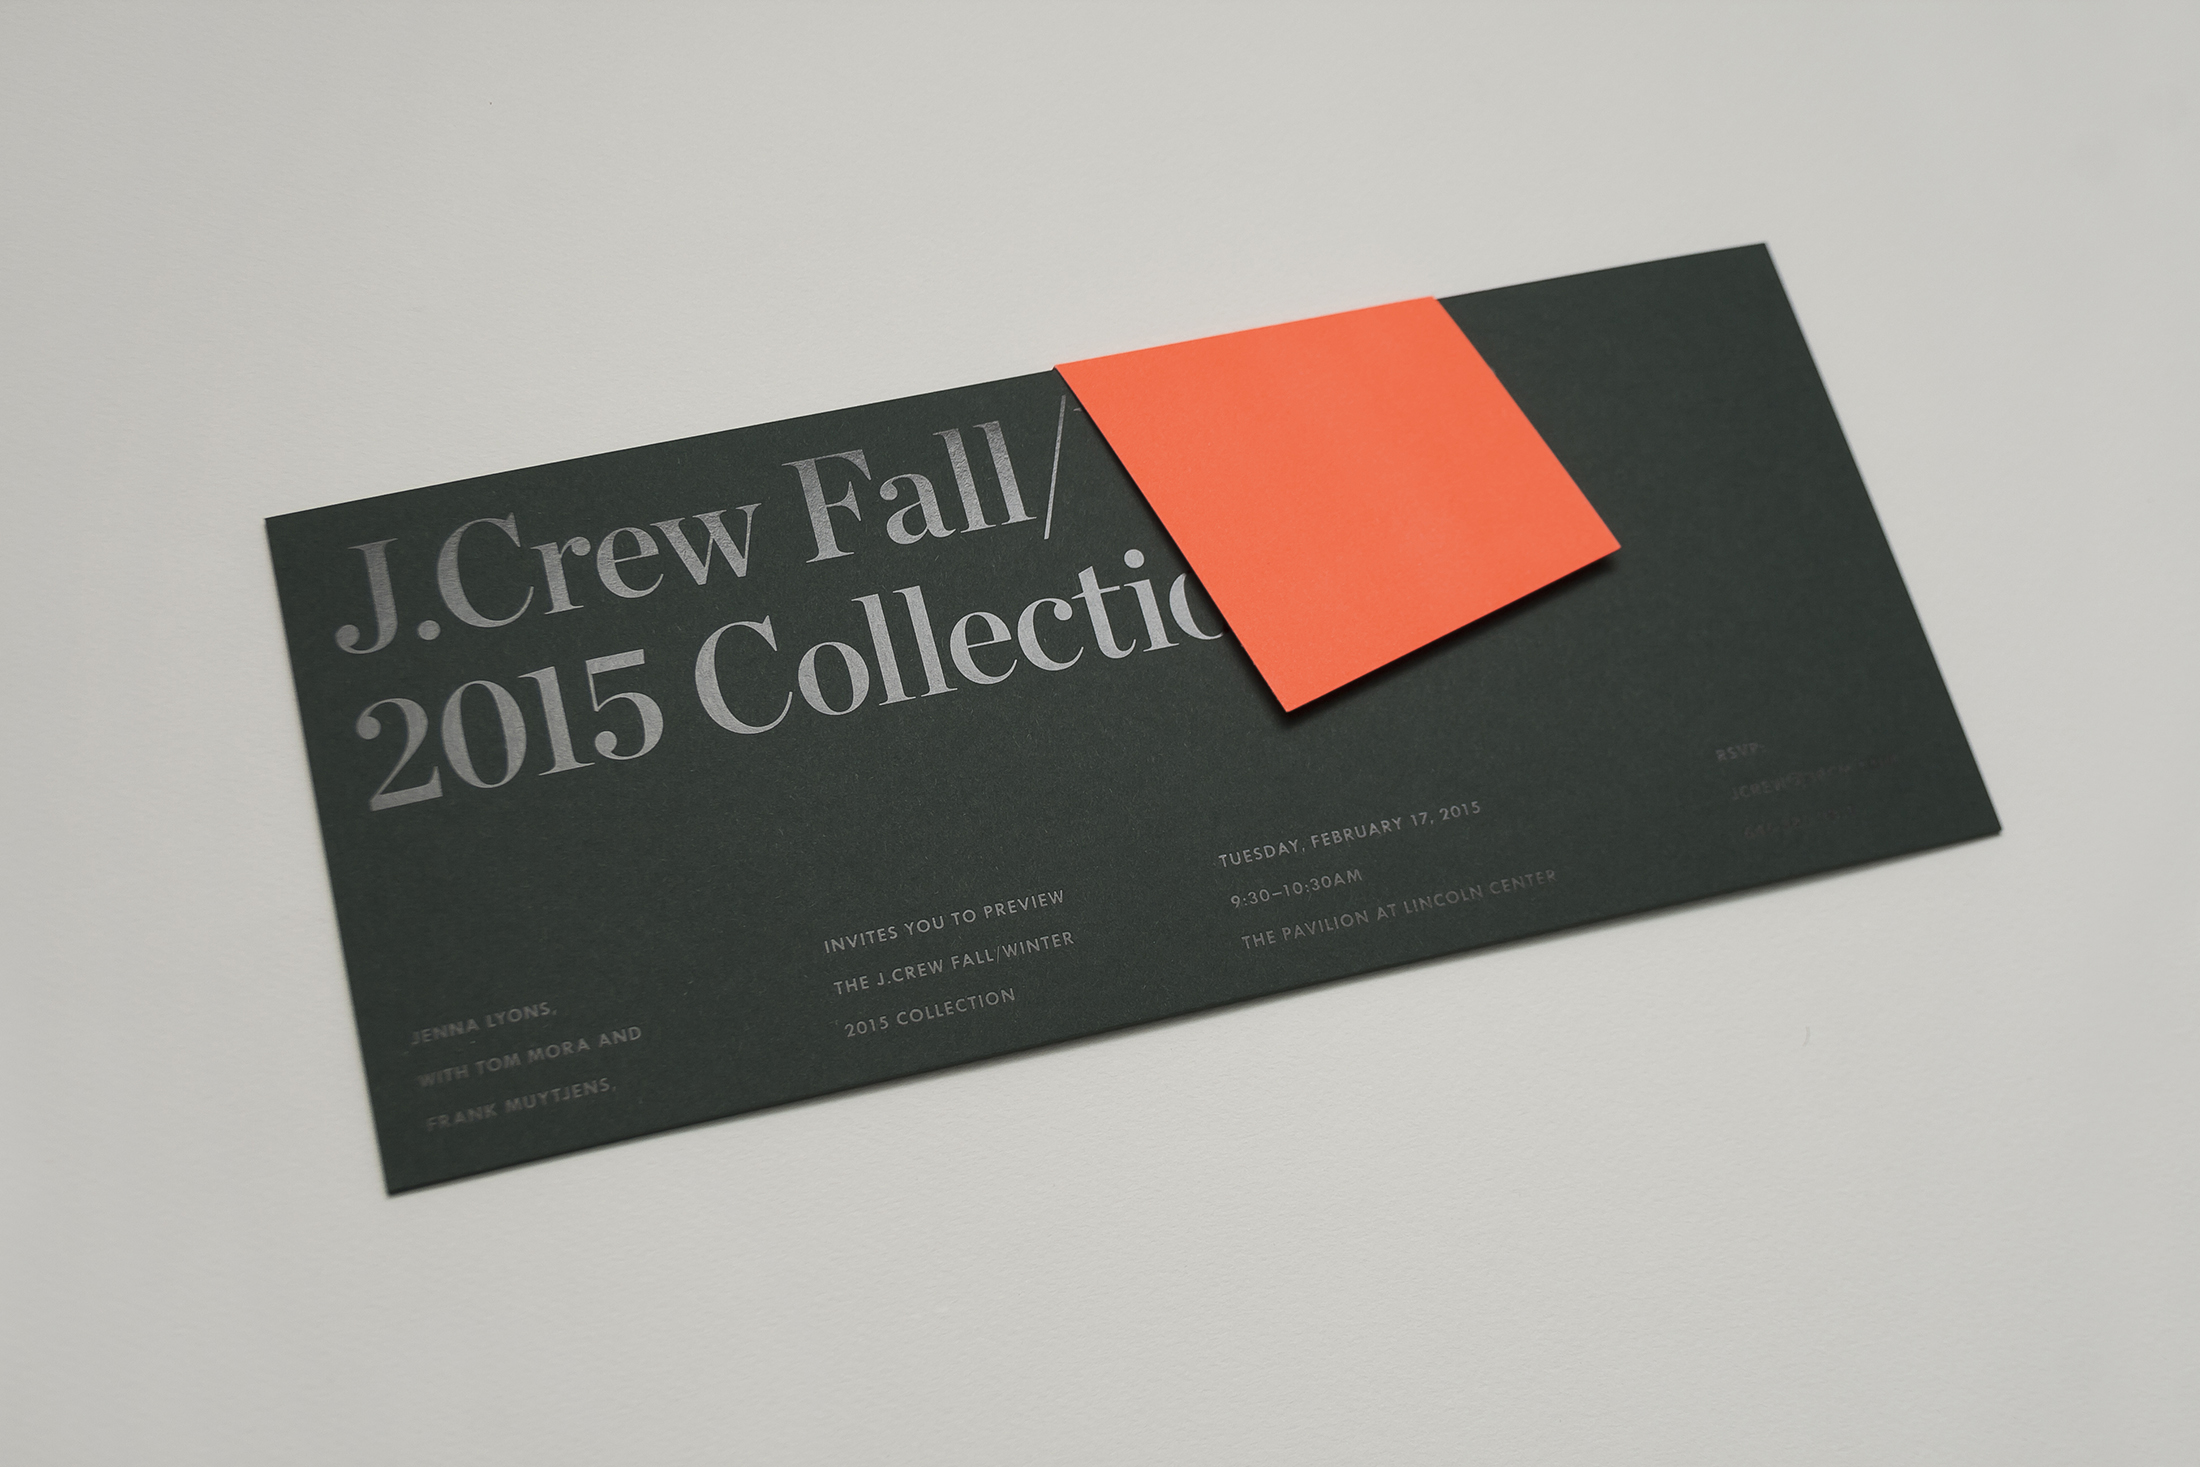 J.Crew Fall/Winter 2015 Invitation